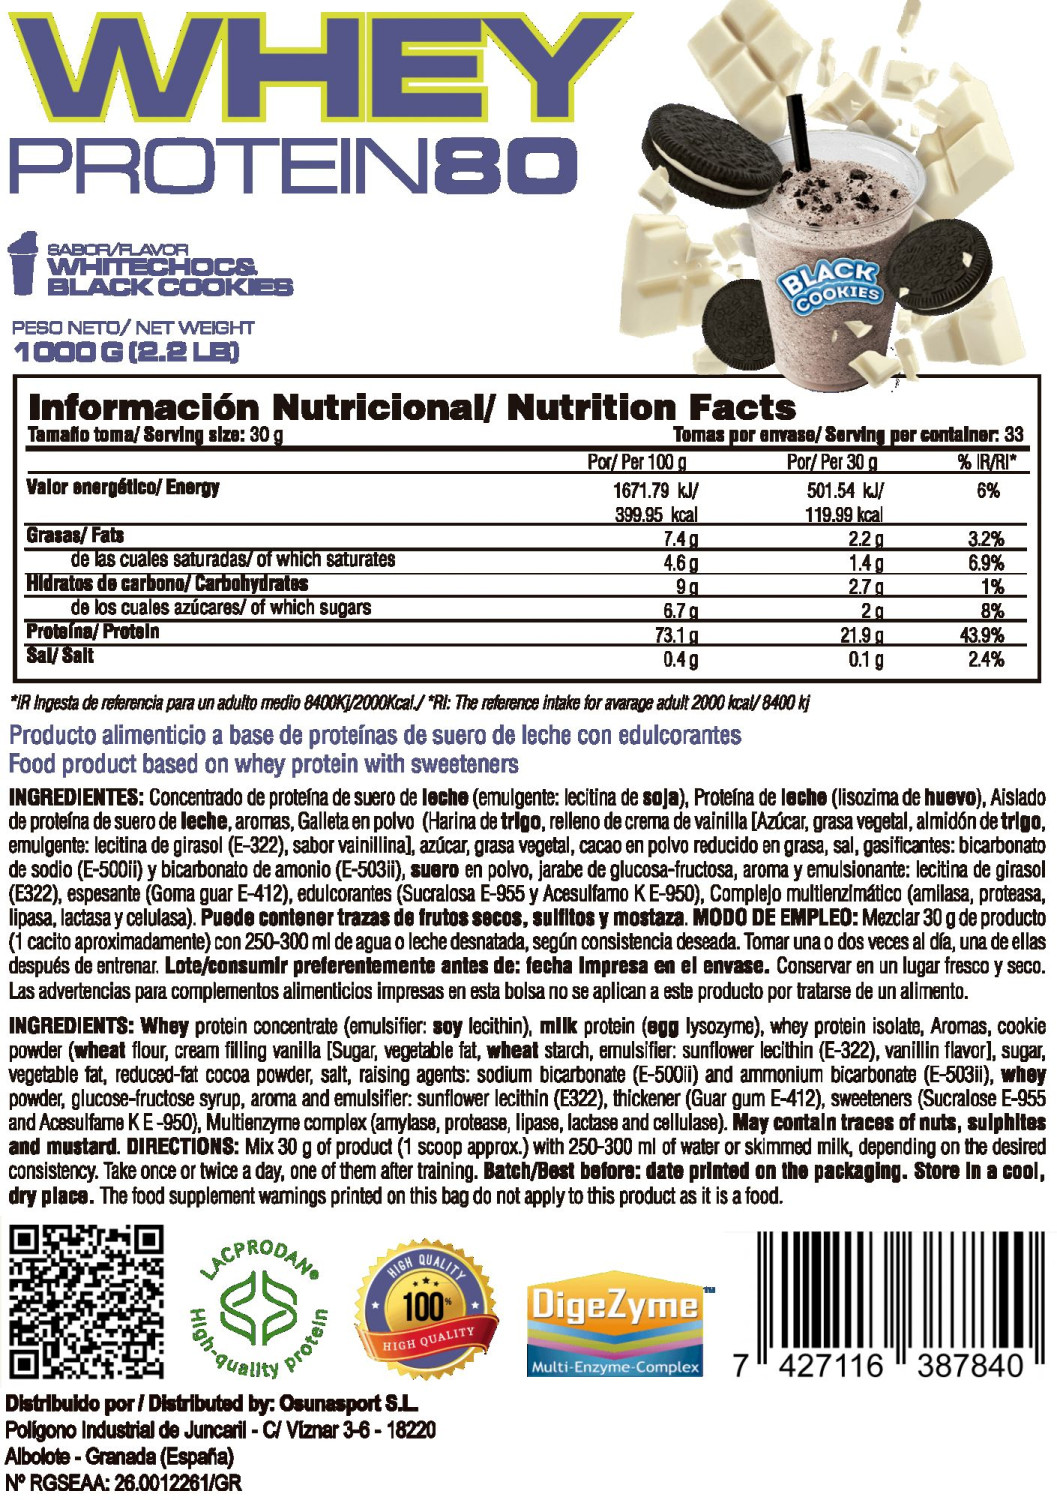 Whey Protein80 - 1kg De Mm Supplements Sabor Chocolate Blanco Con Black Cookies